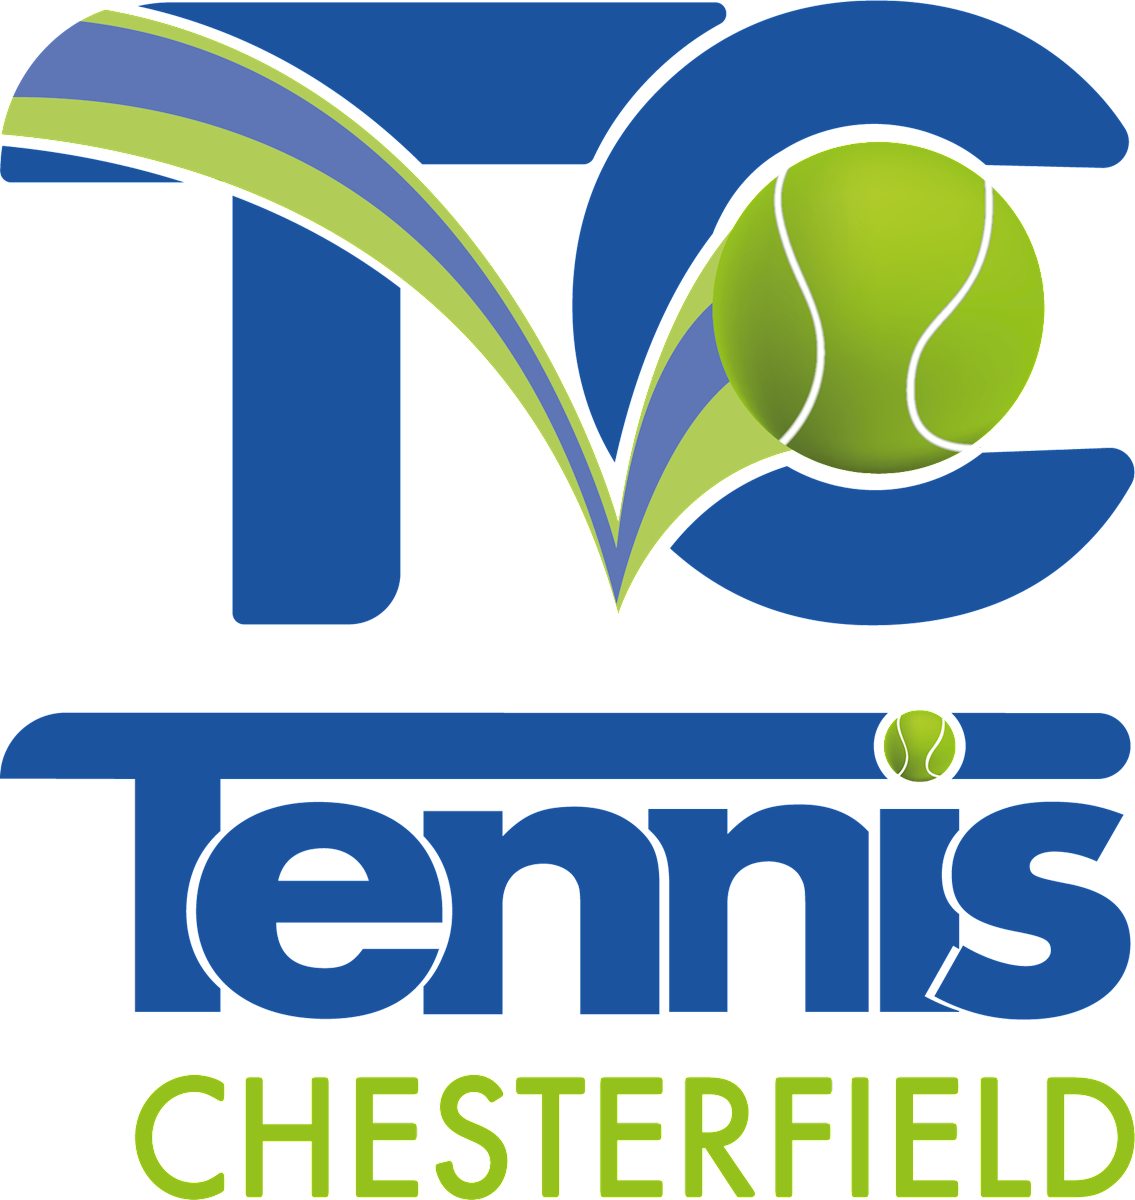 Tennis Chesterfield